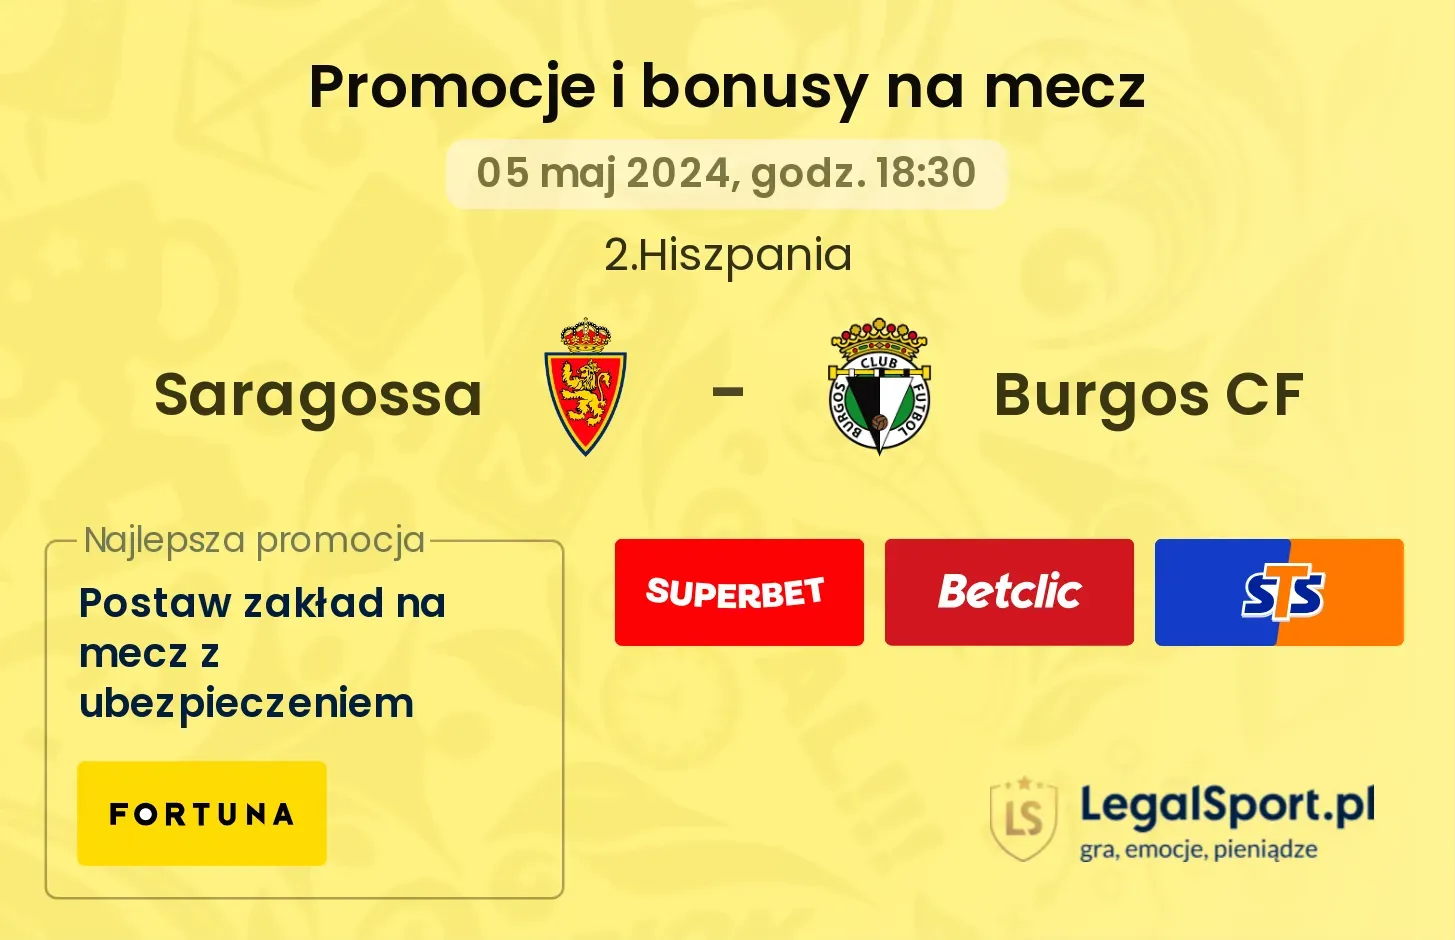 Saragossa - Burgos CF promocje bonusy na mecz